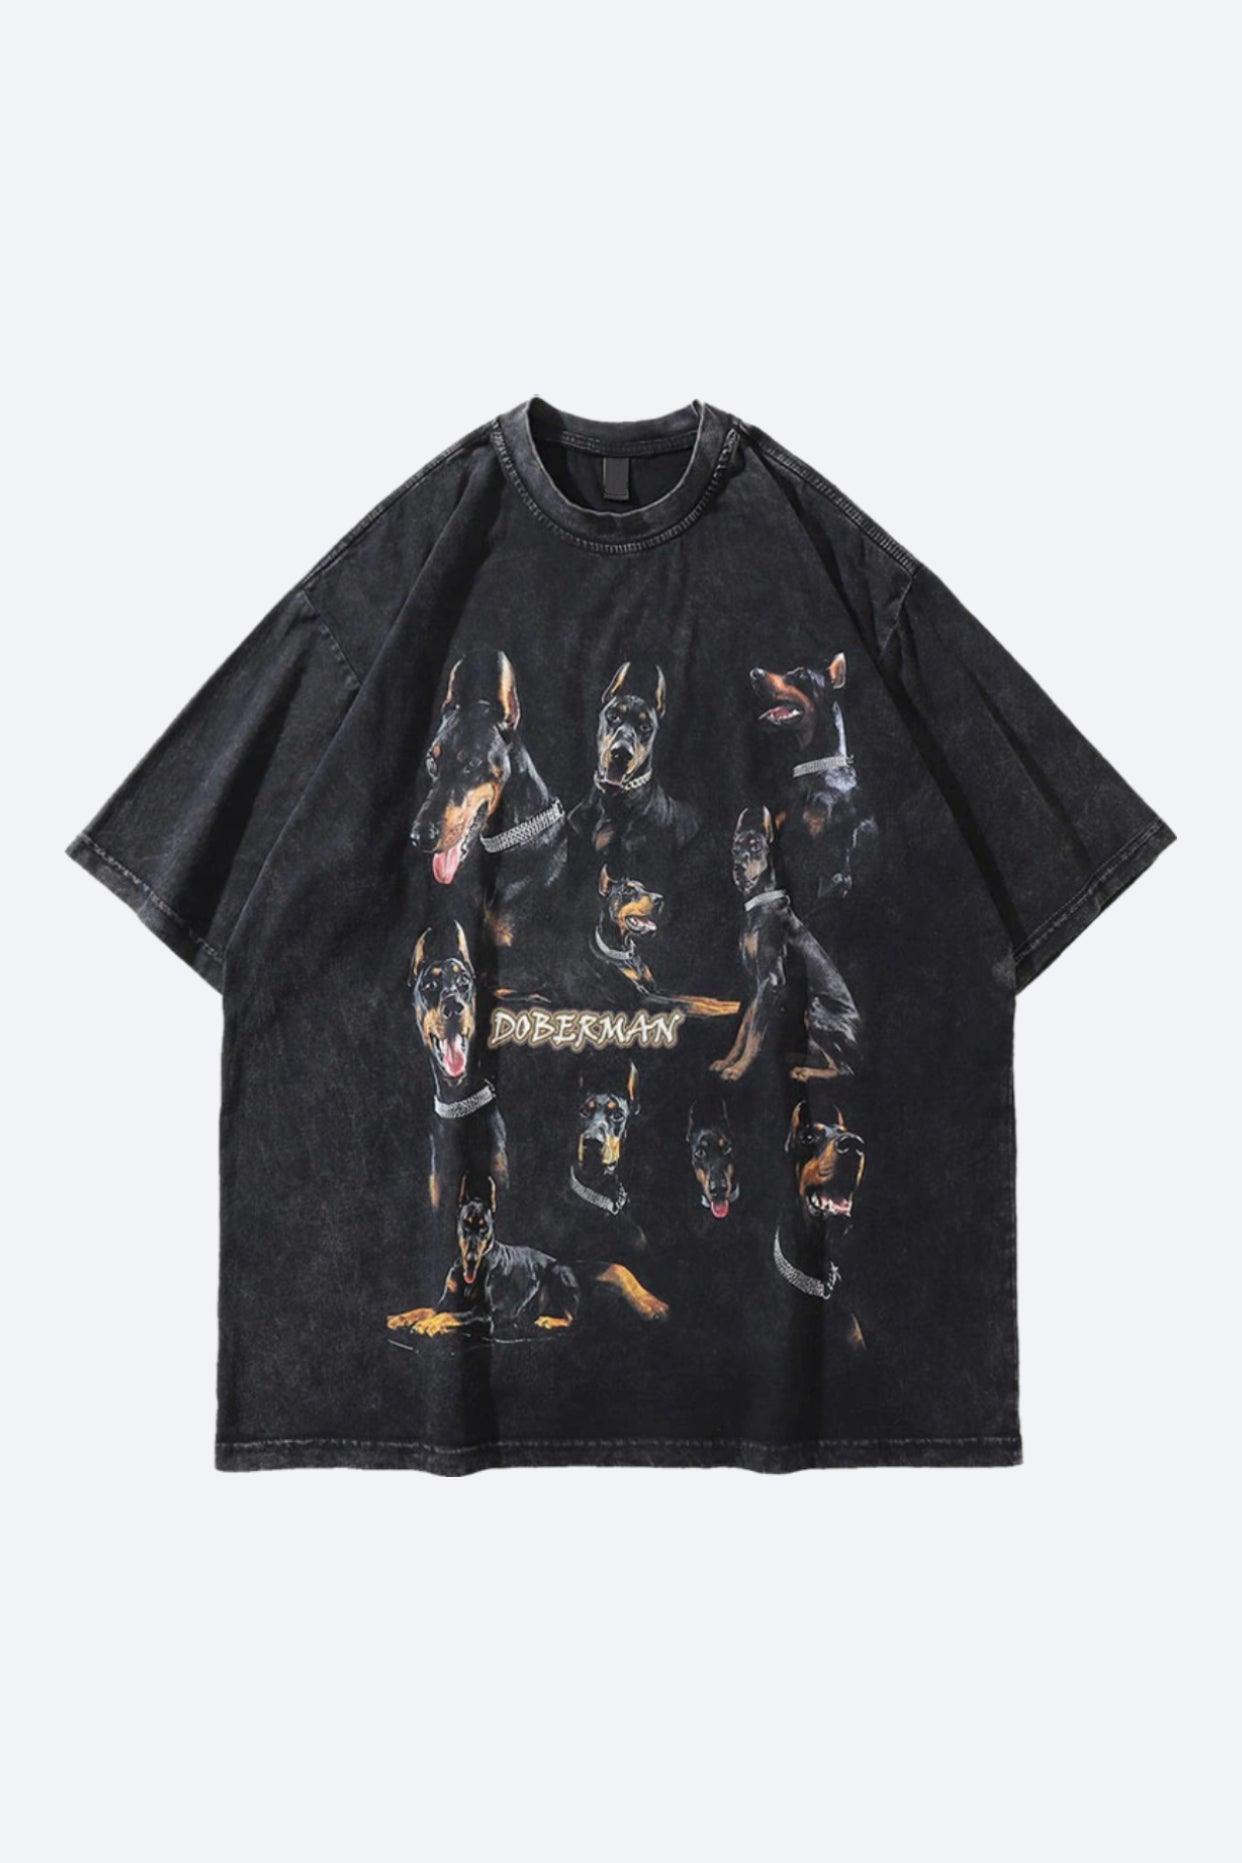 Doberman T-Shirt Streetwear Brand Techwear Combat Tactical YUGEN THEORY